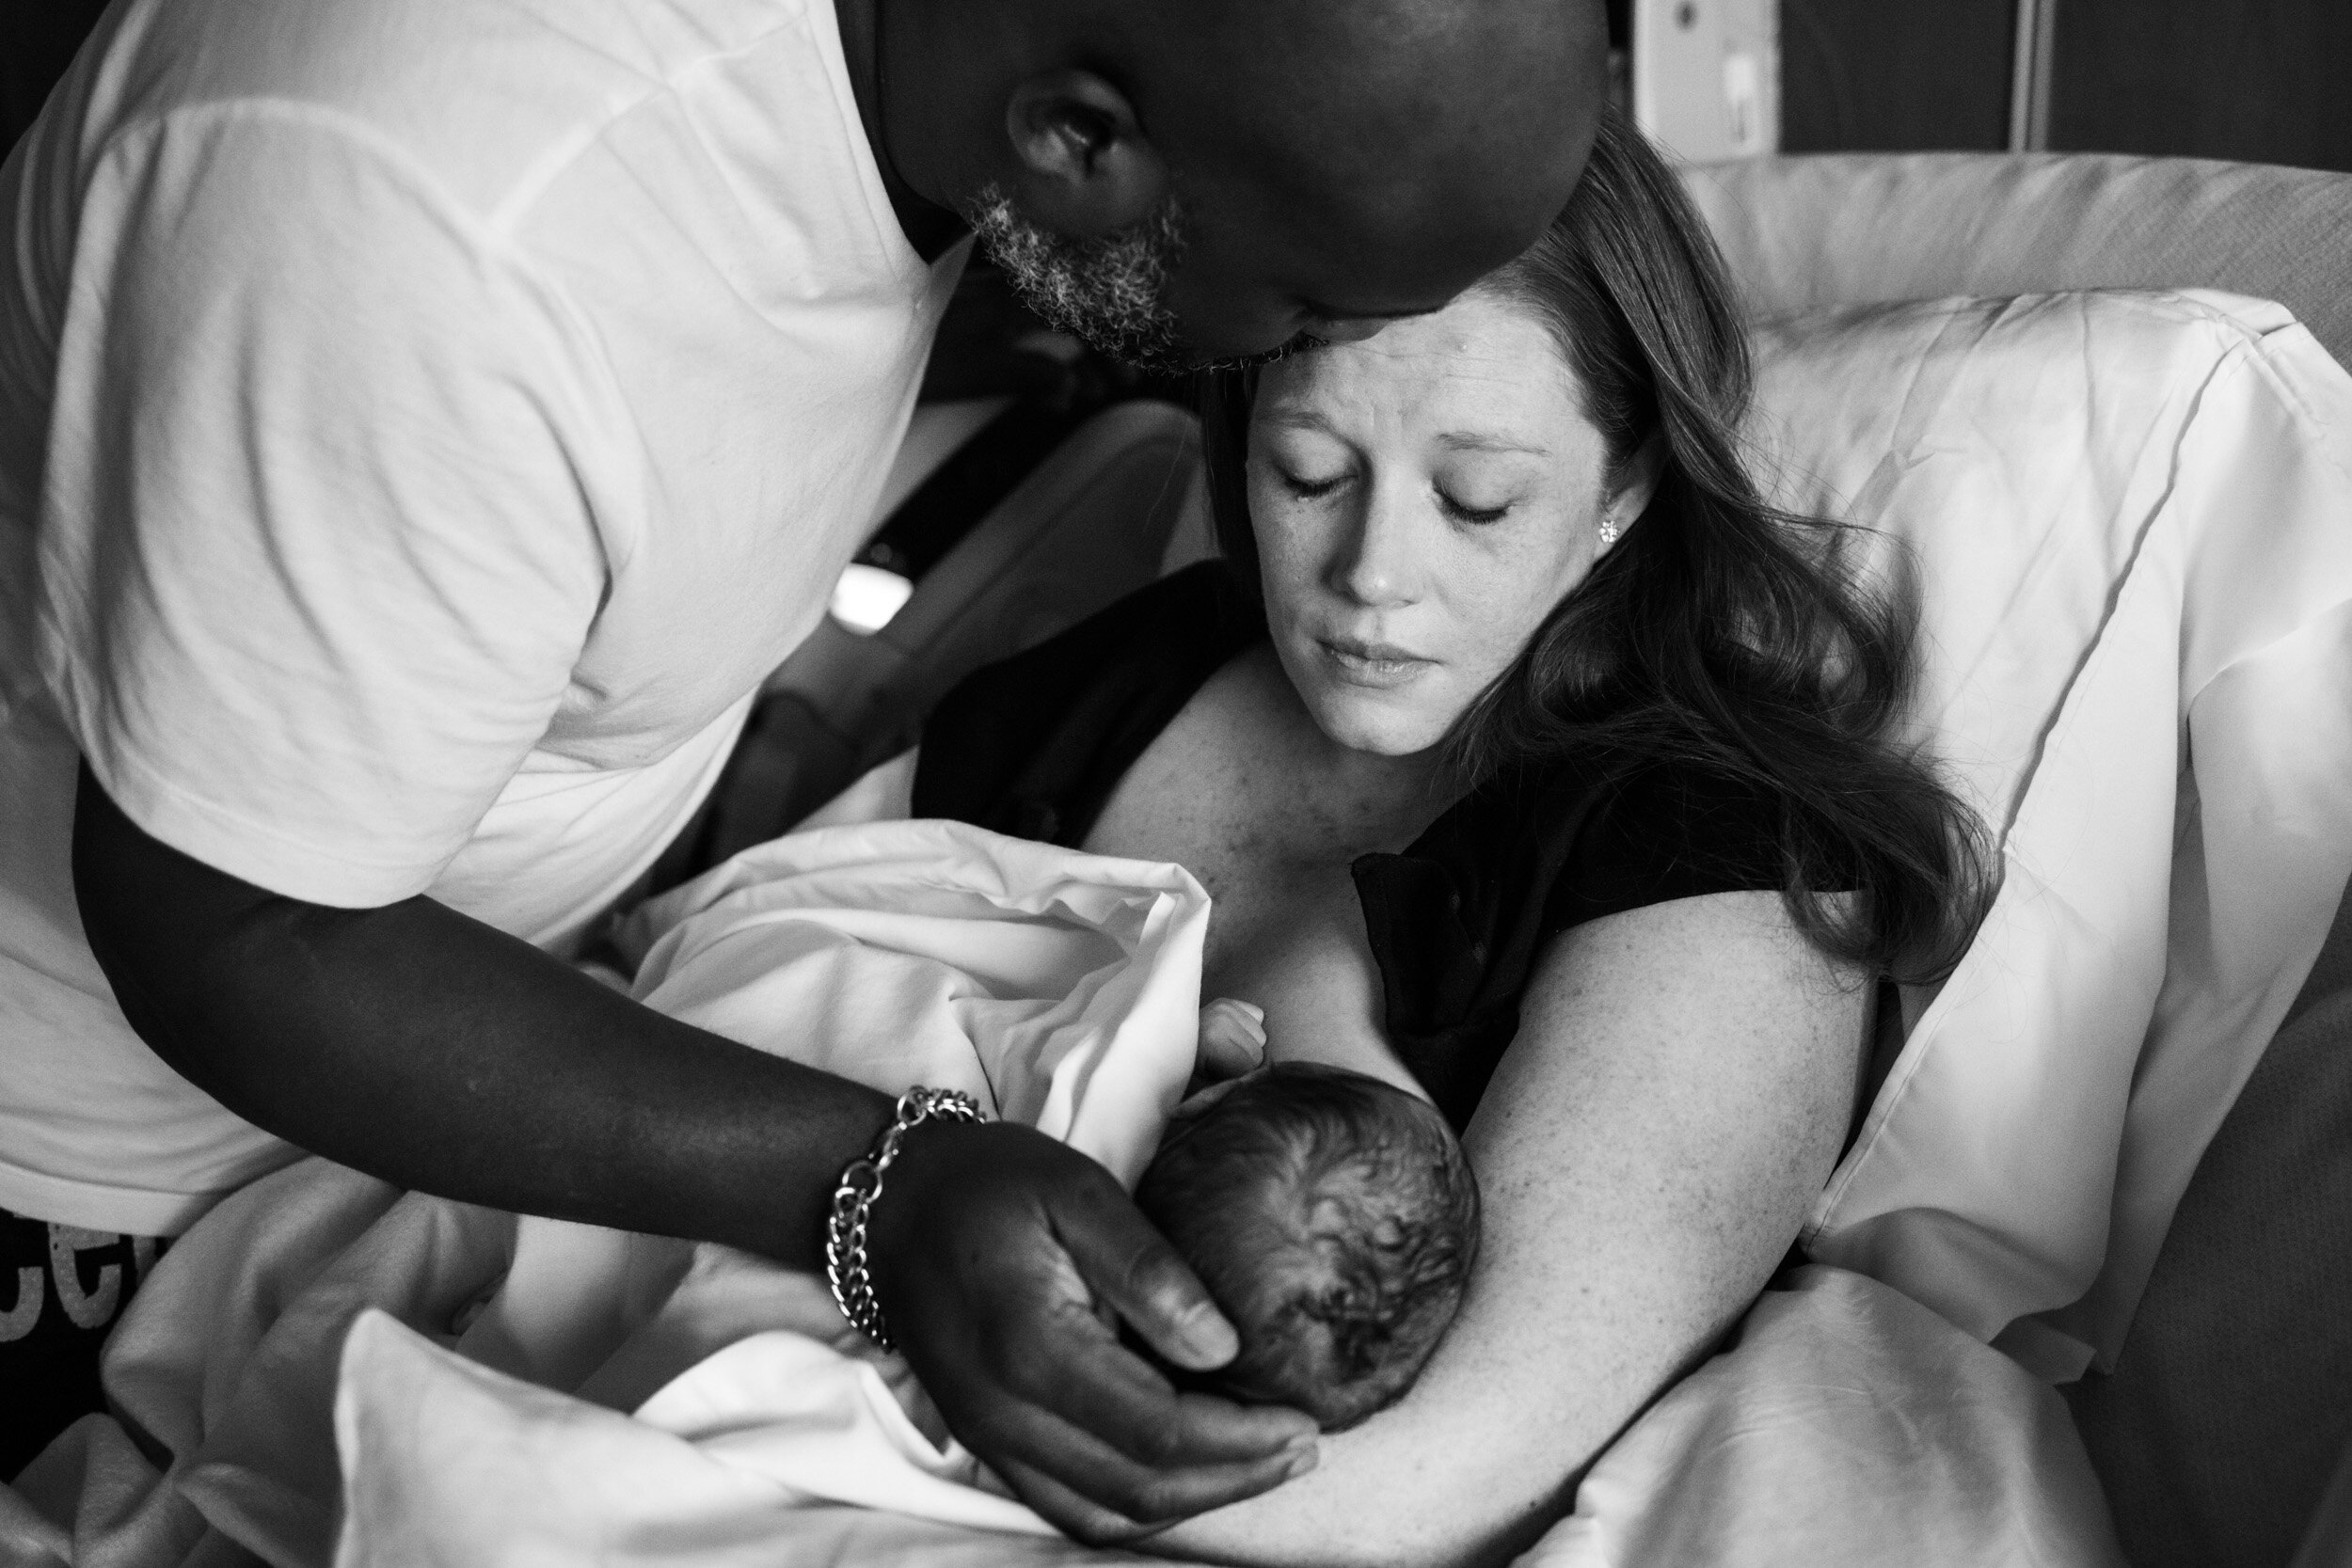 birth parents looking at newborn baby boy at Jacksonville hospital